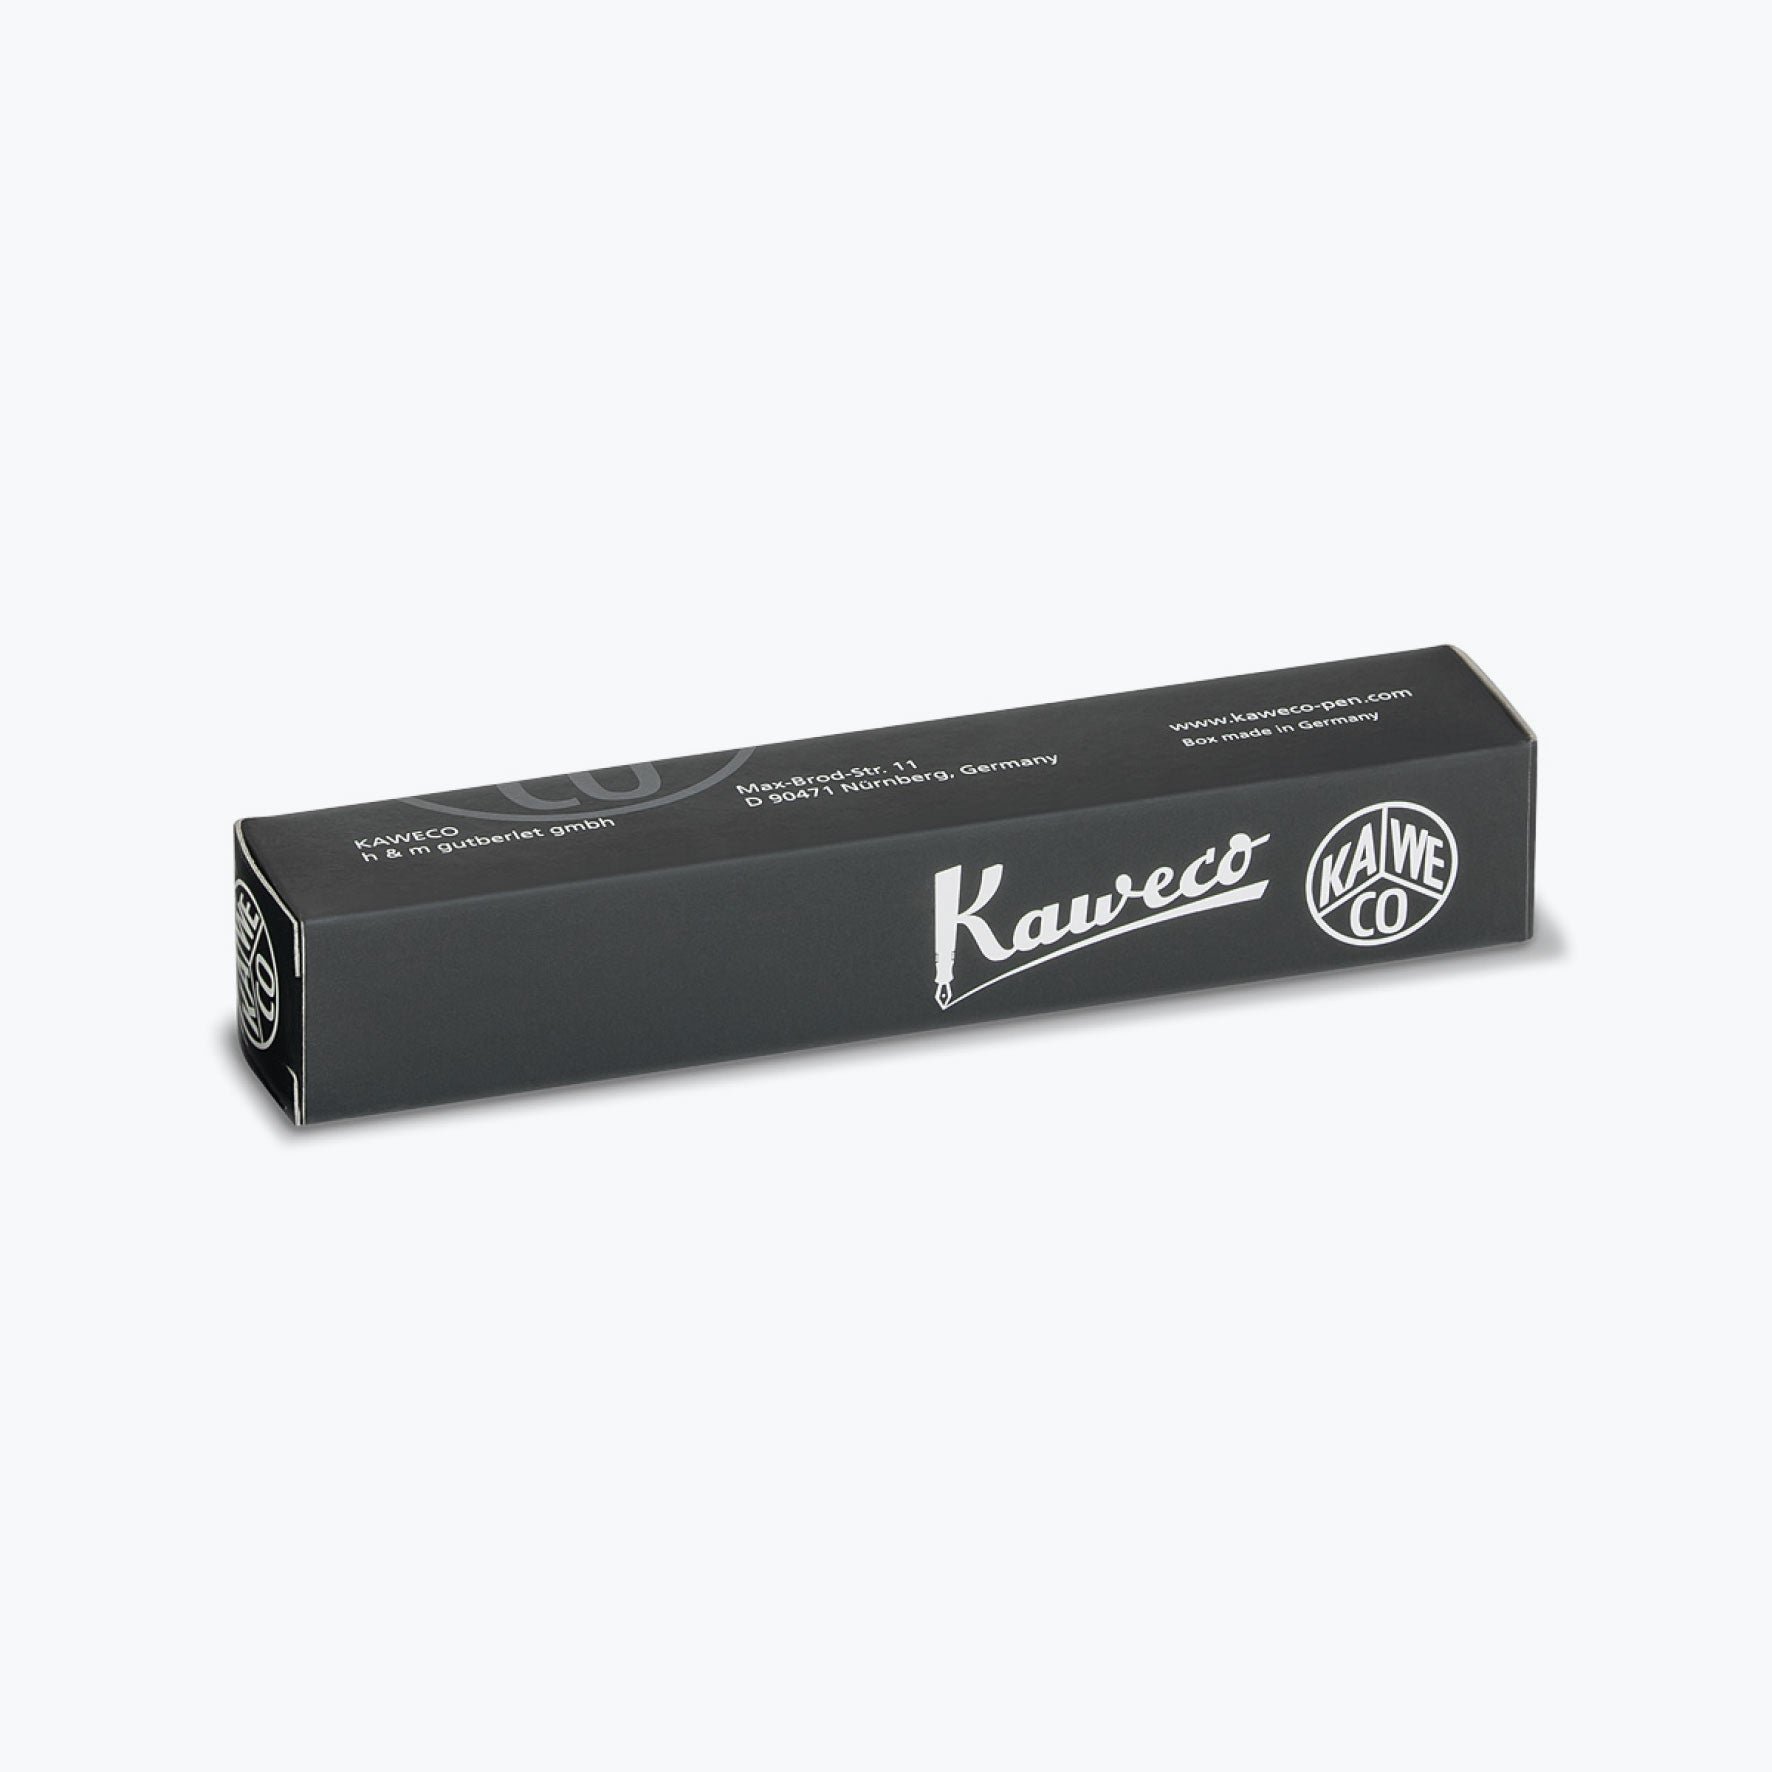 Kaweco - Rollerball Pen - Skyline Sport - White <Outgoing>